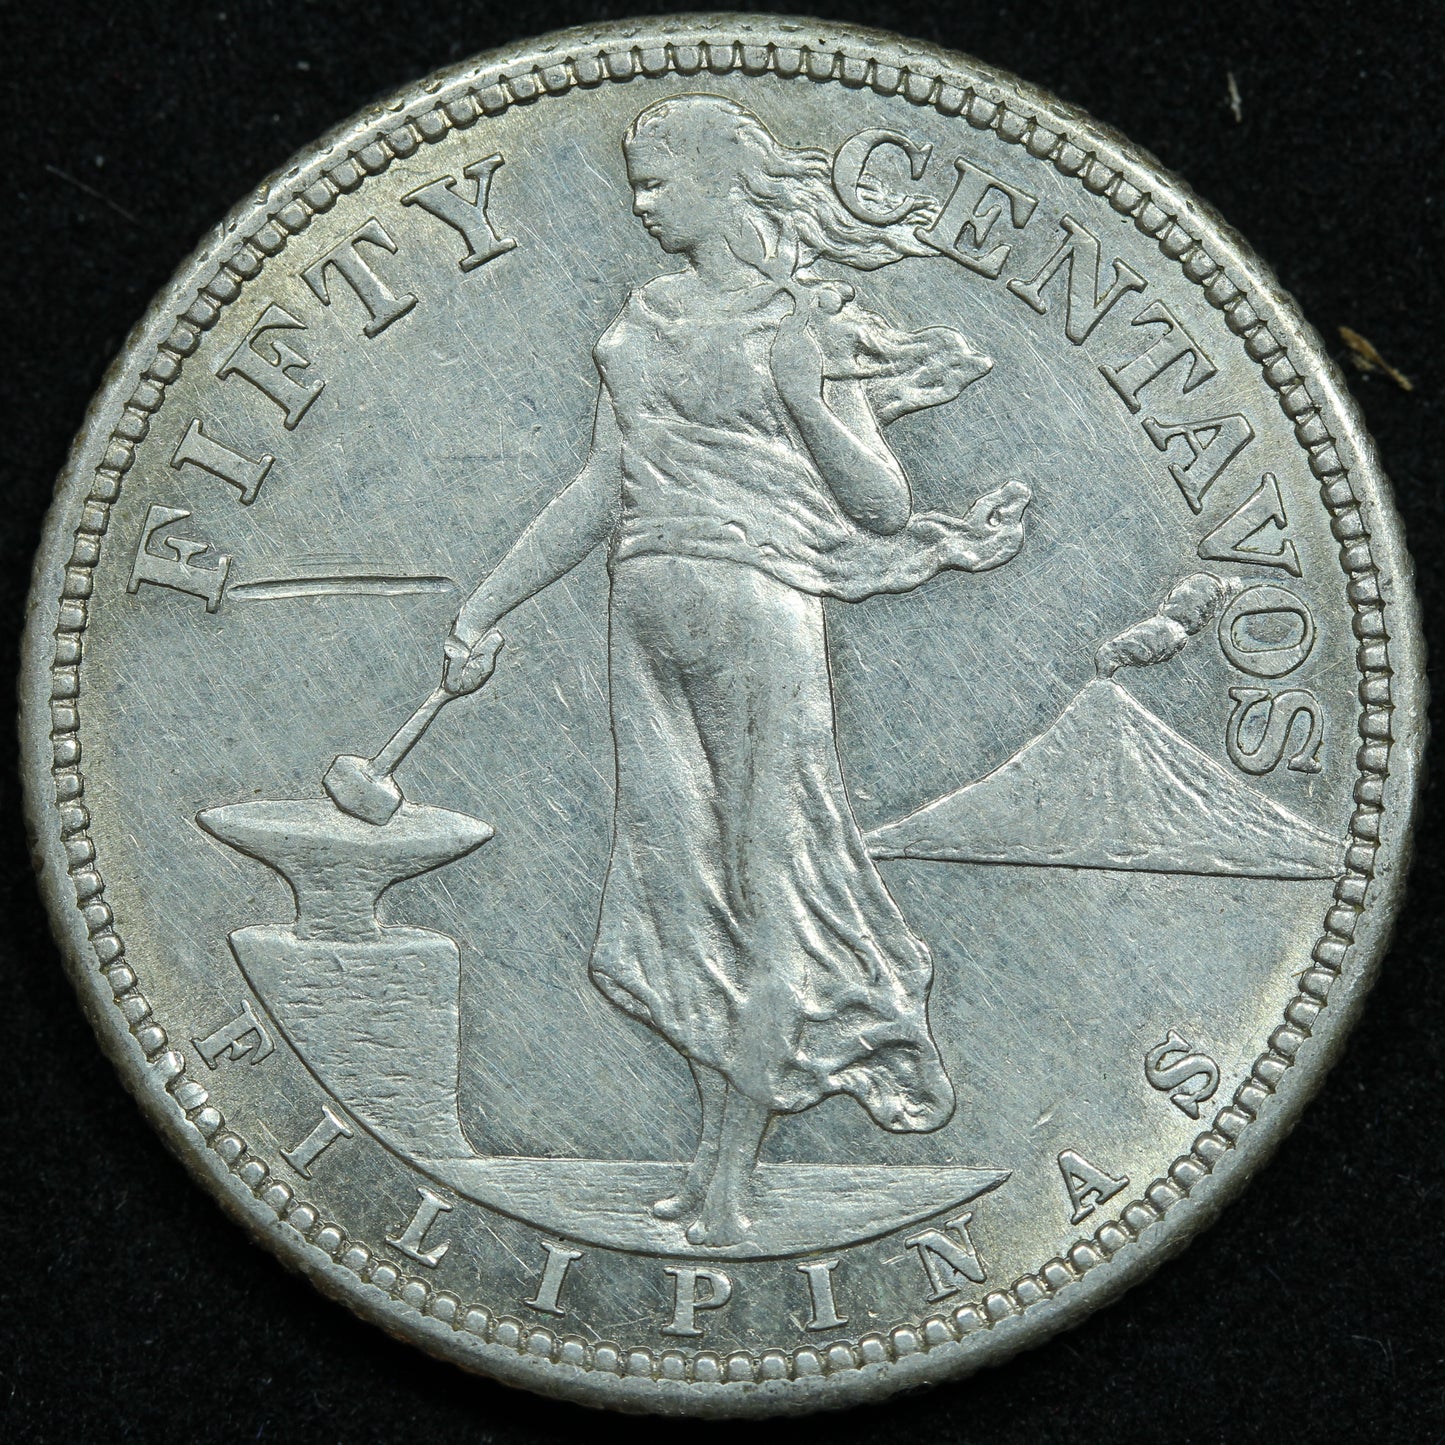 1918 S 50 Centavos Philippines Silver Coin - KM# 171